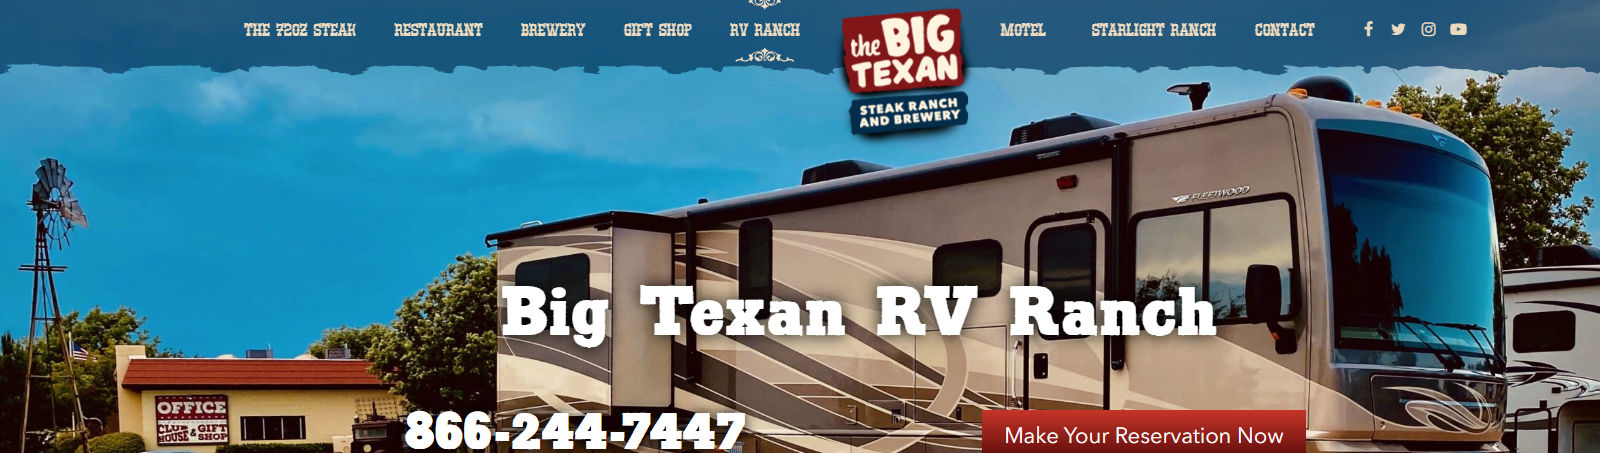 Big Texan RV Ranch Amarillo Texas 79104